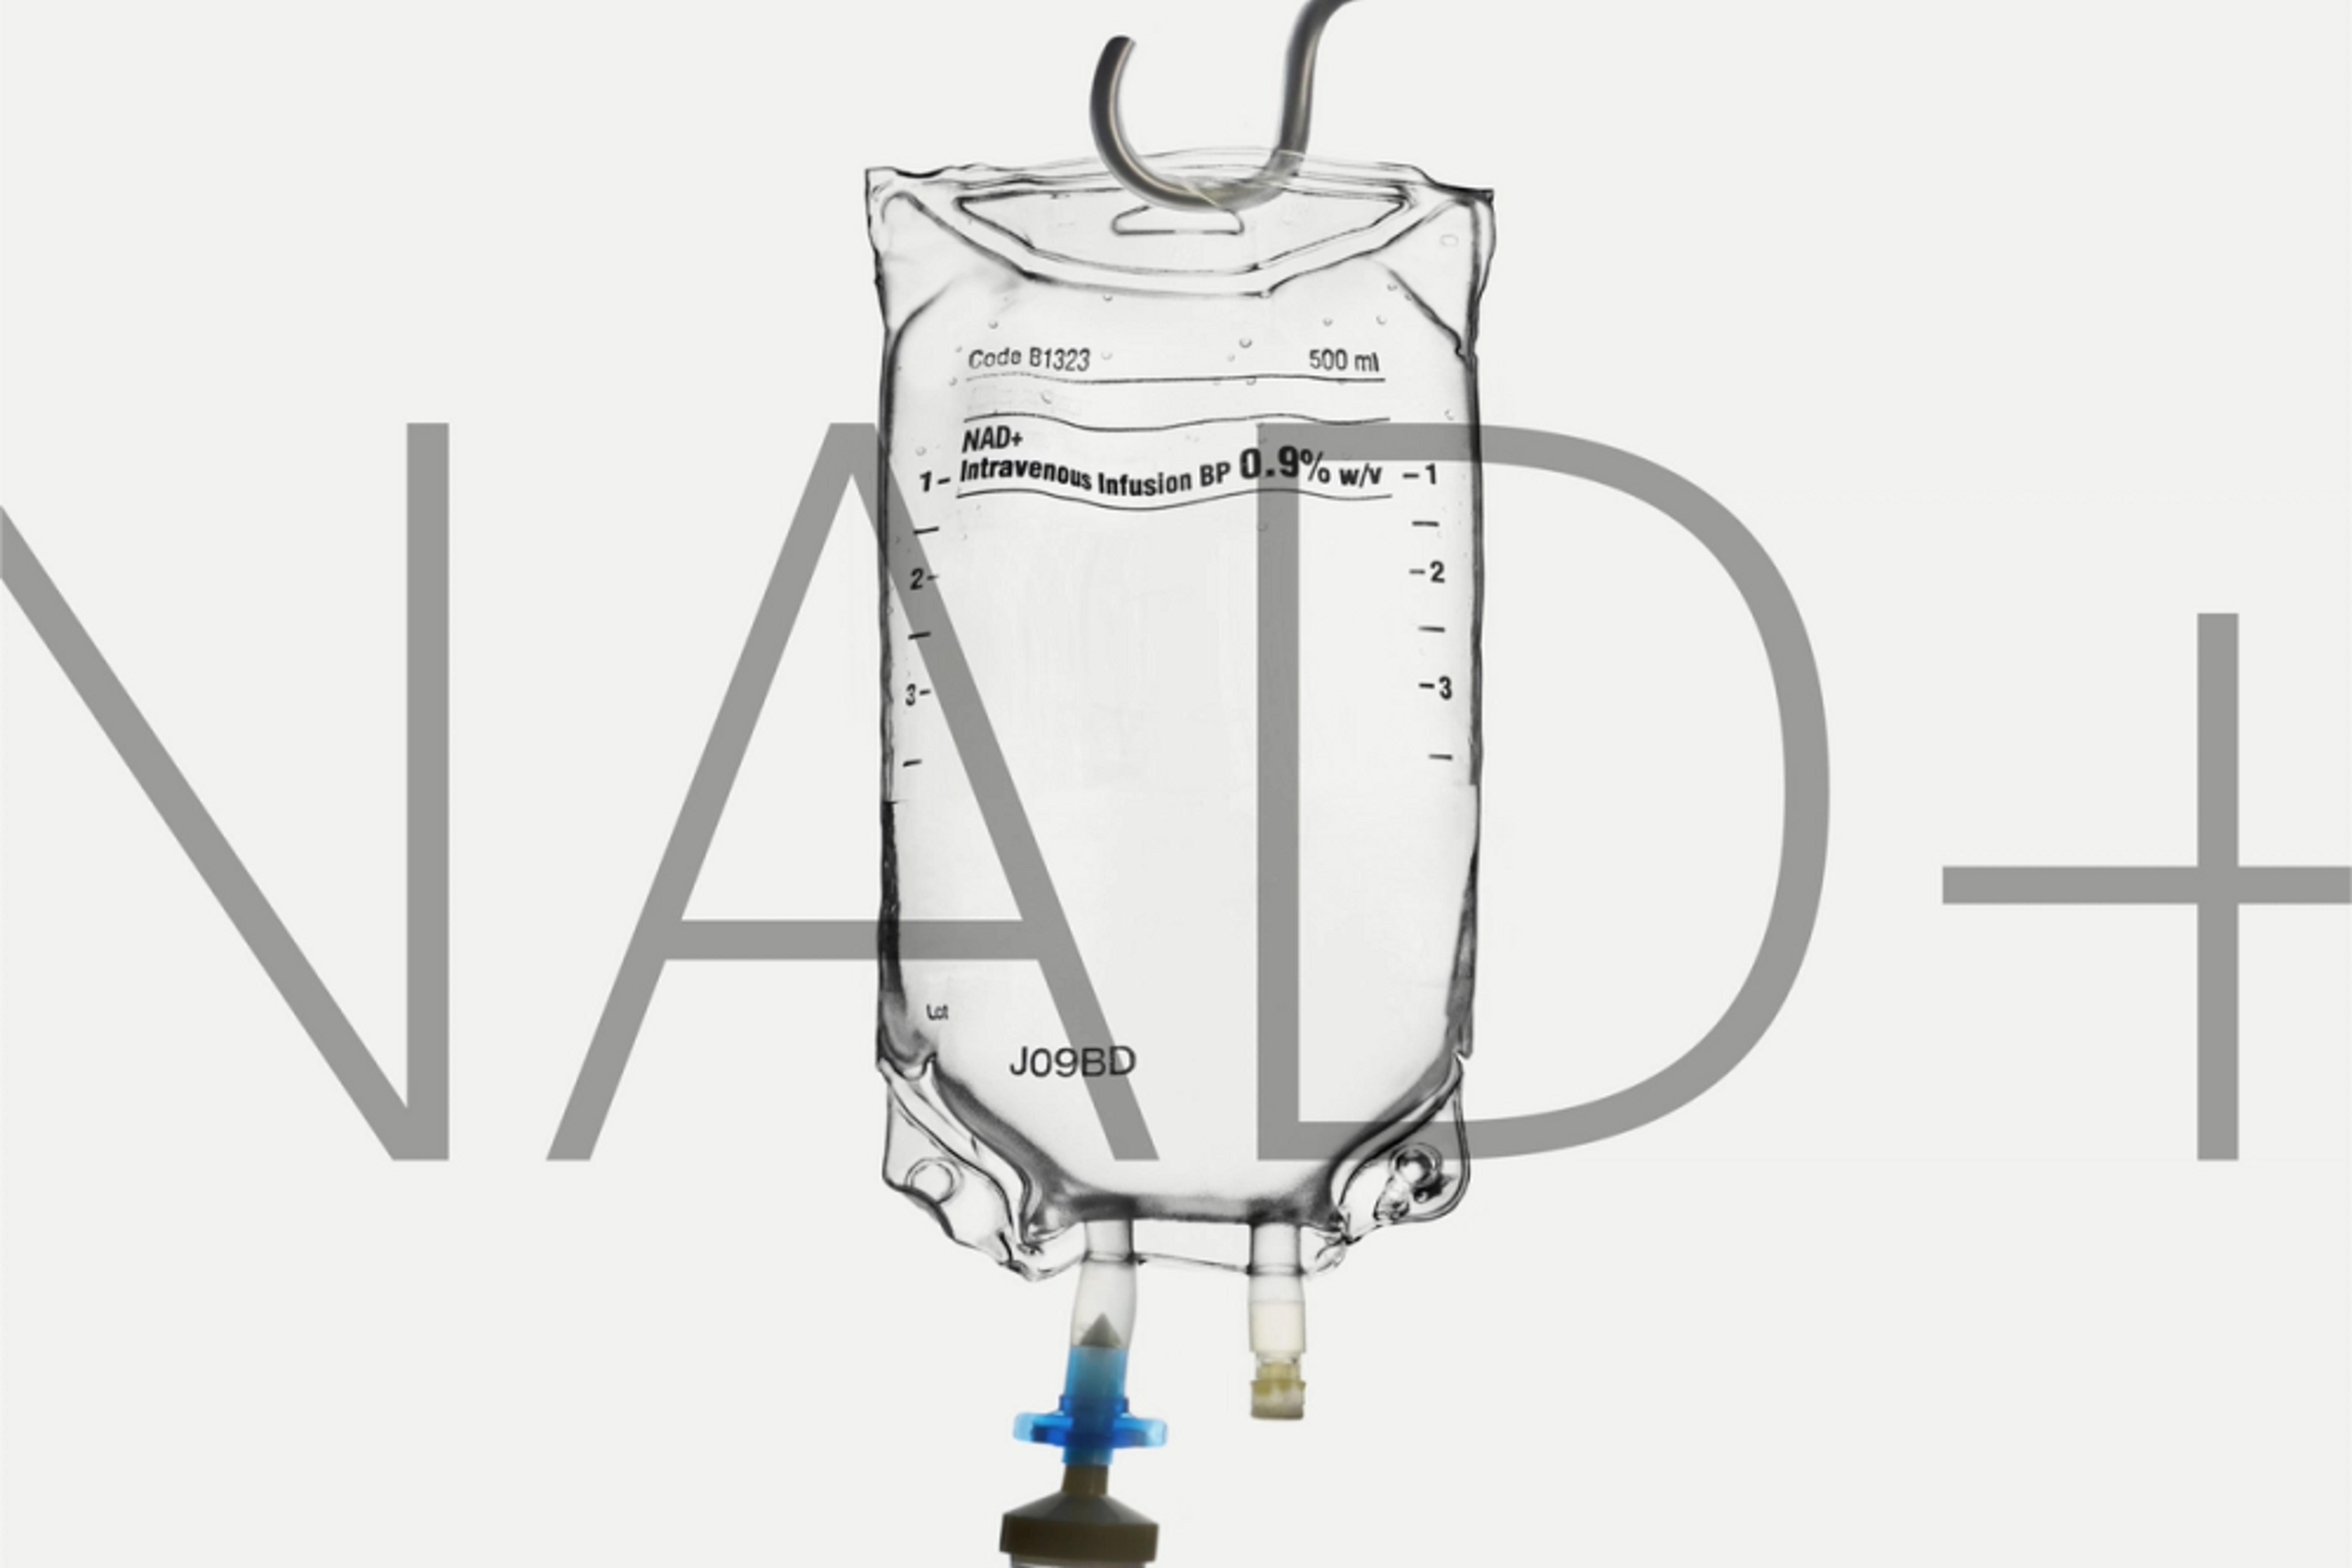 NAD+ IV Drip Bag